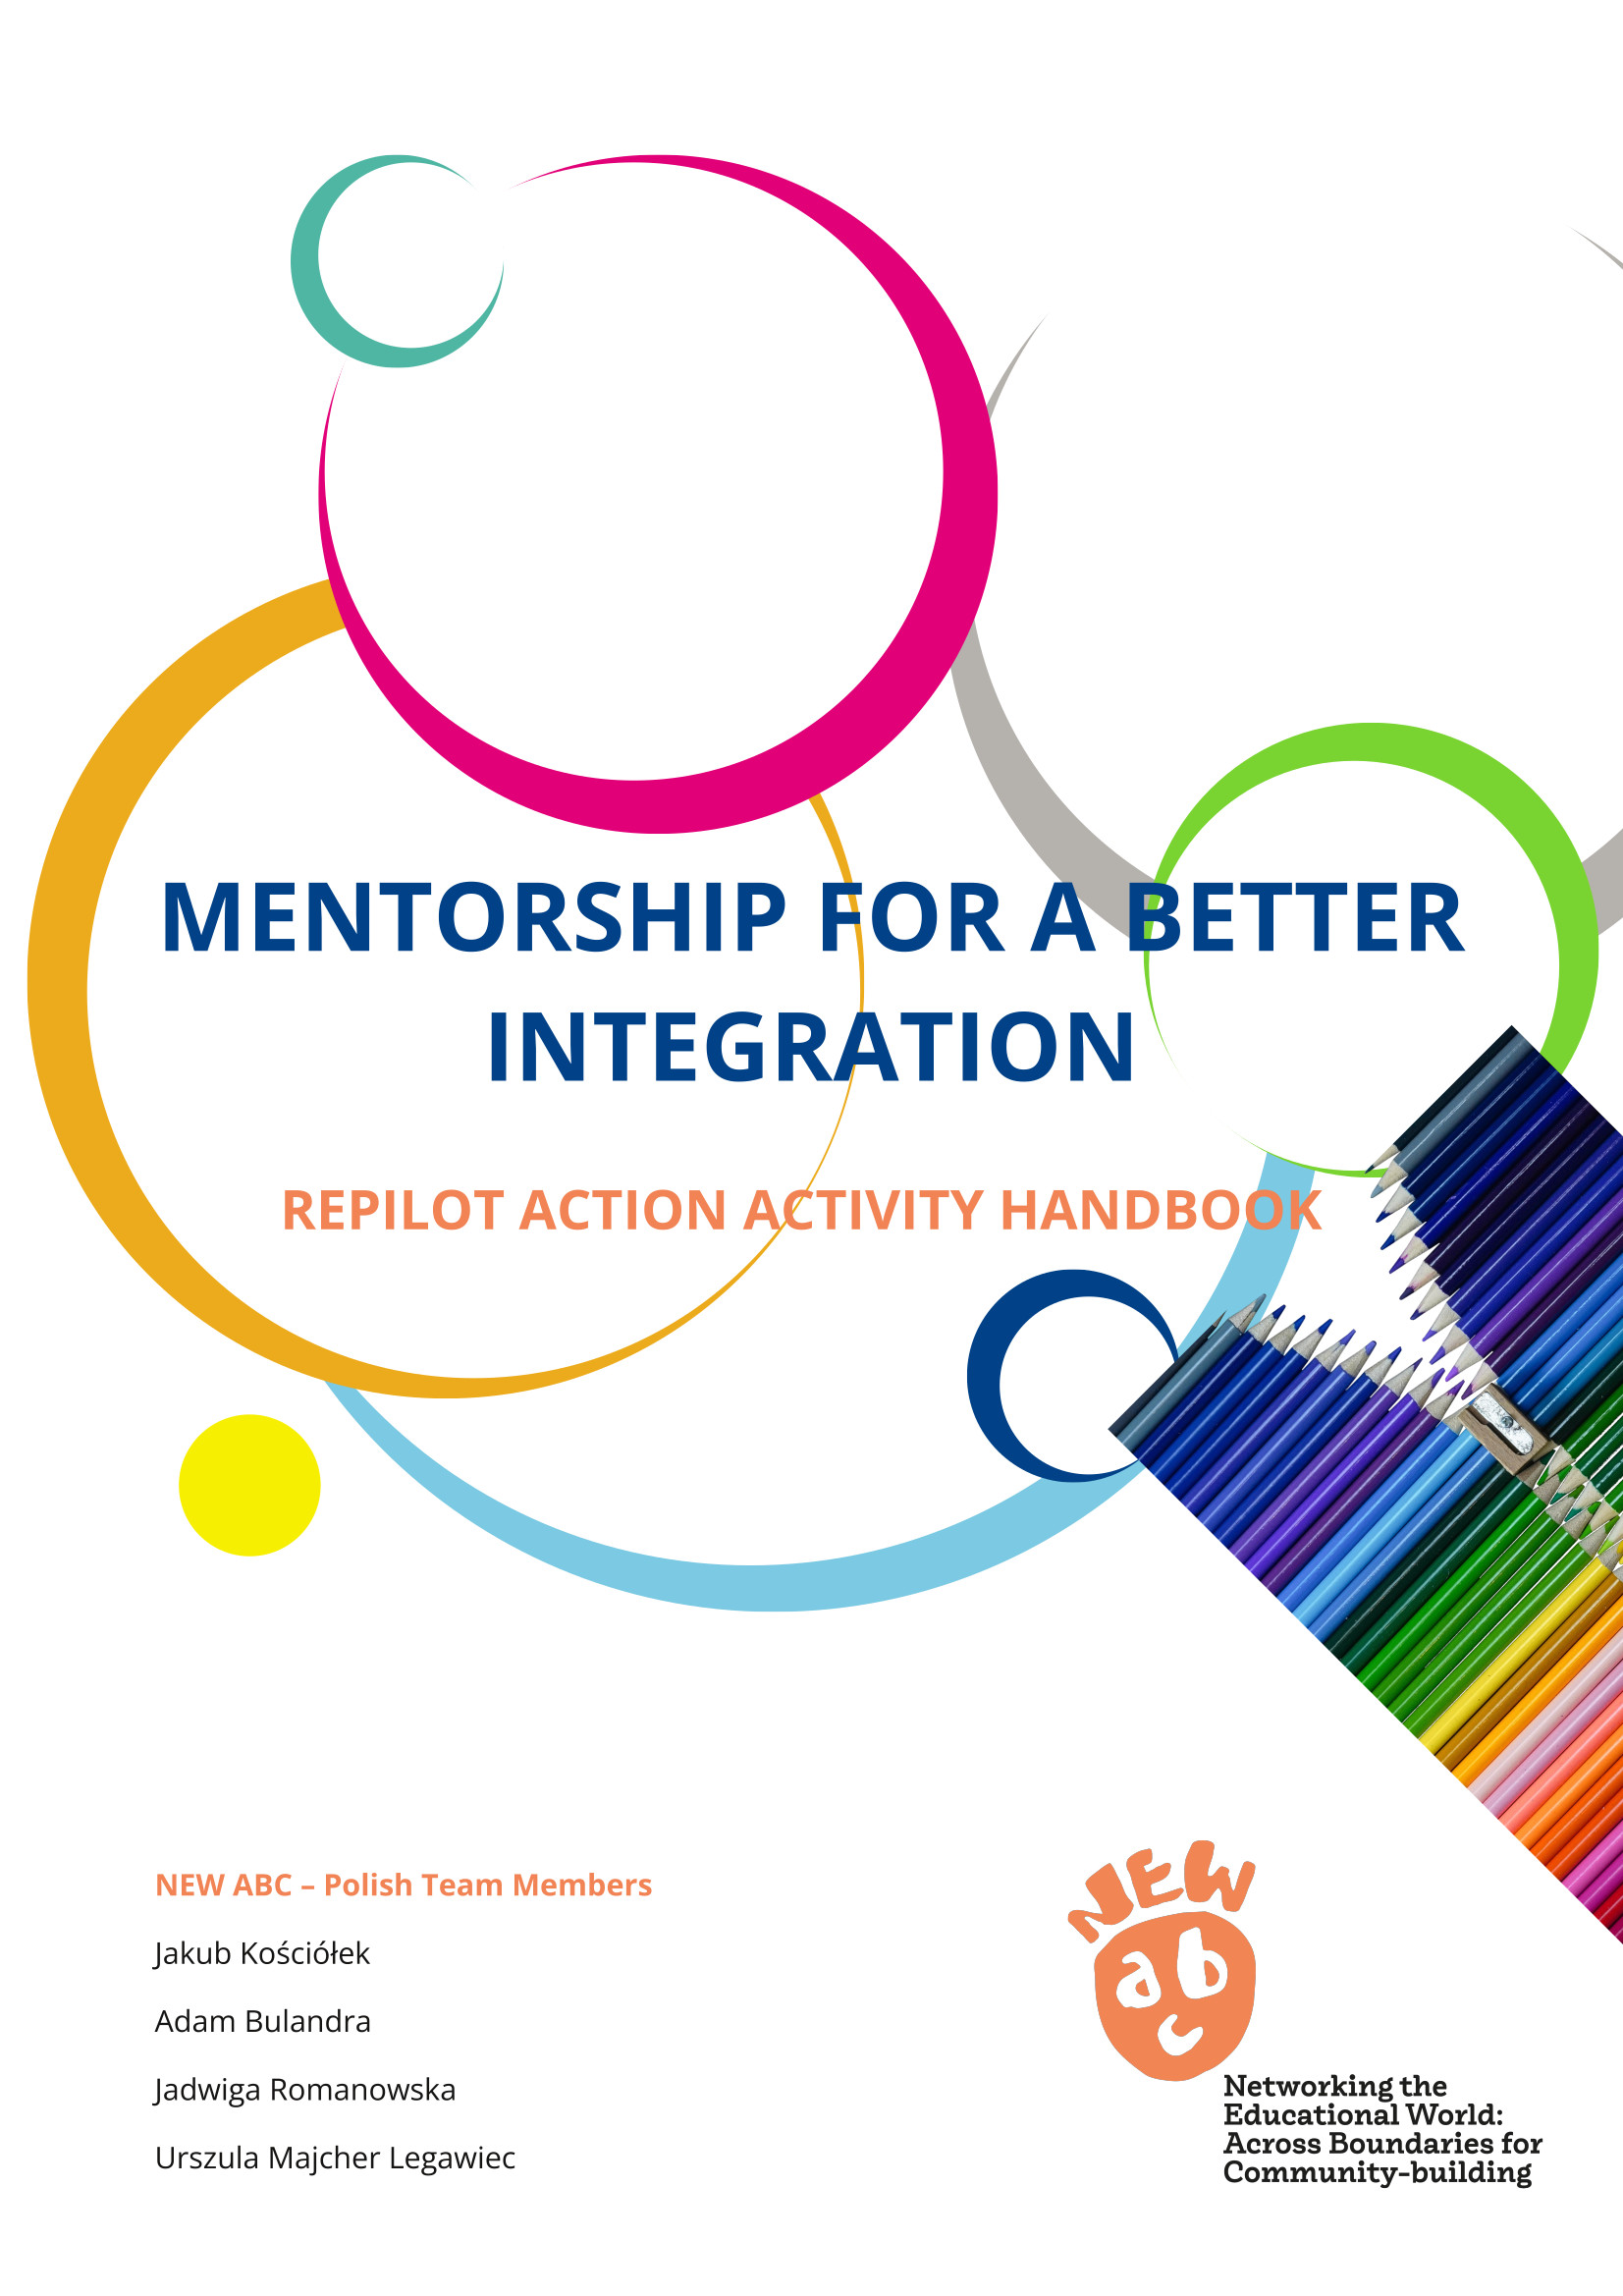 Mentorship for a better integration